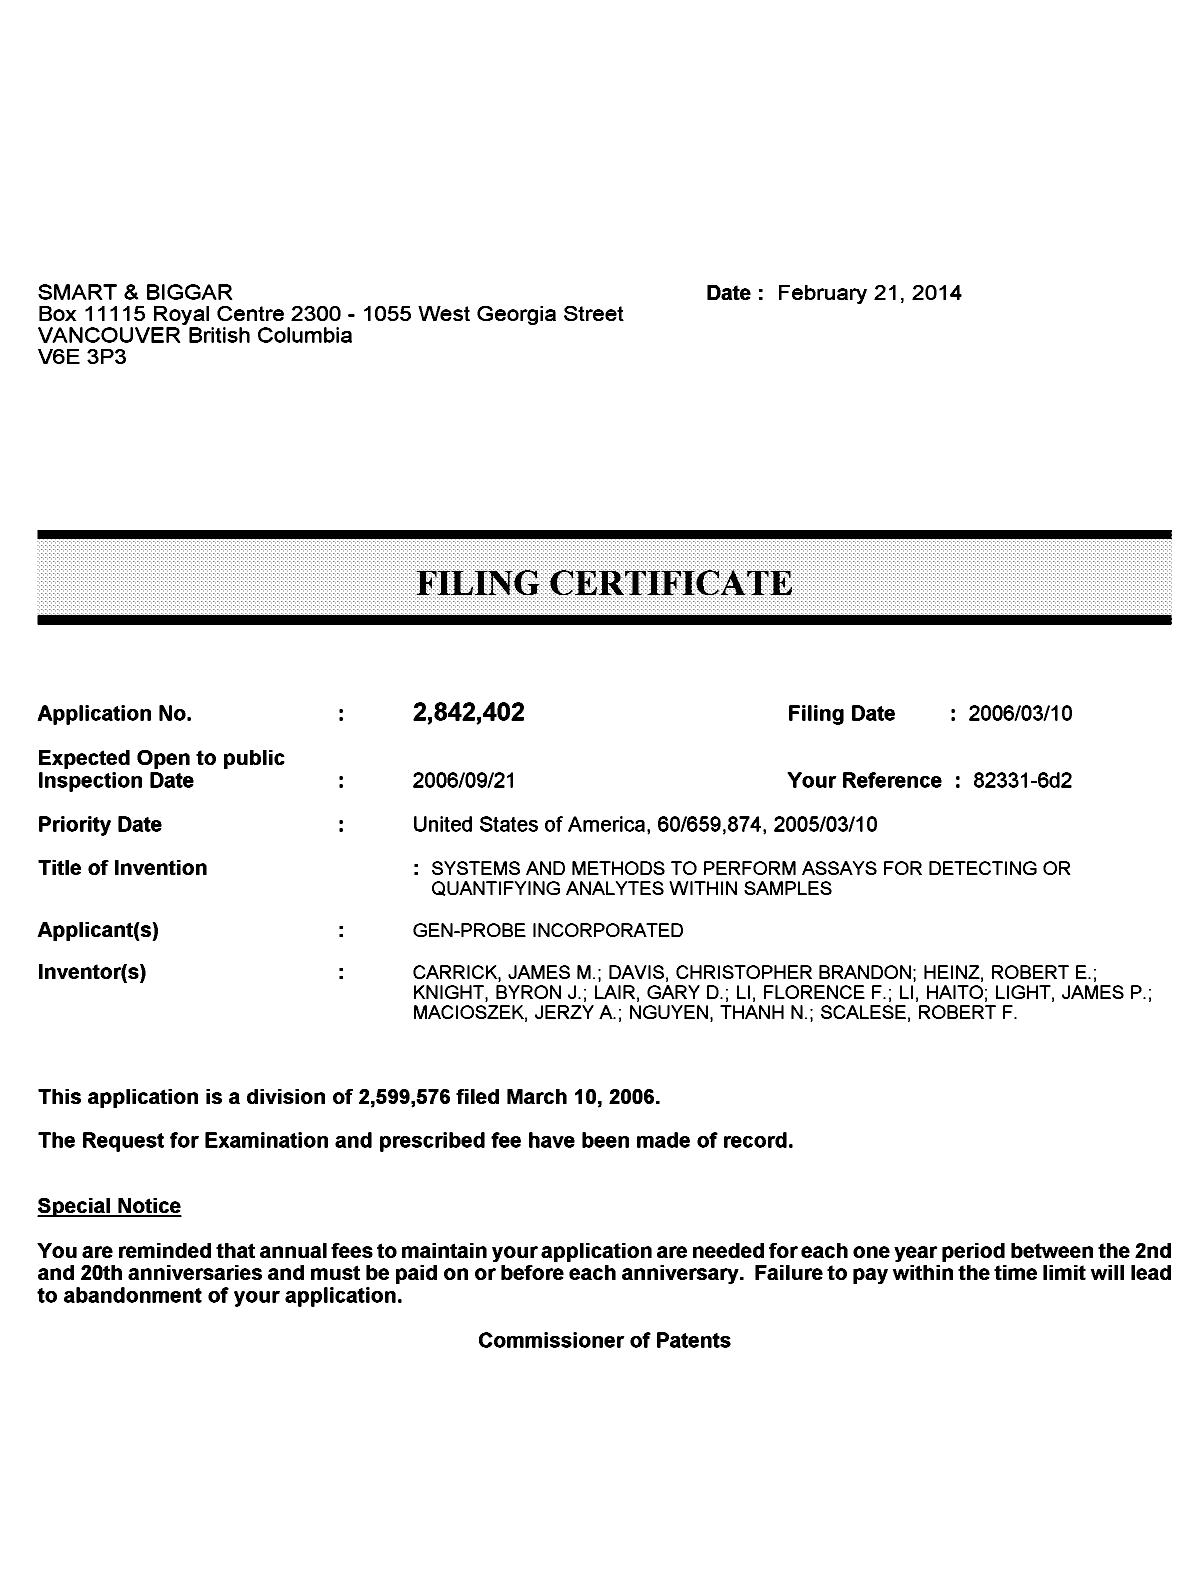 Canadian Patent Document 2842402. Correspondence 20140221. Image 1 of 1